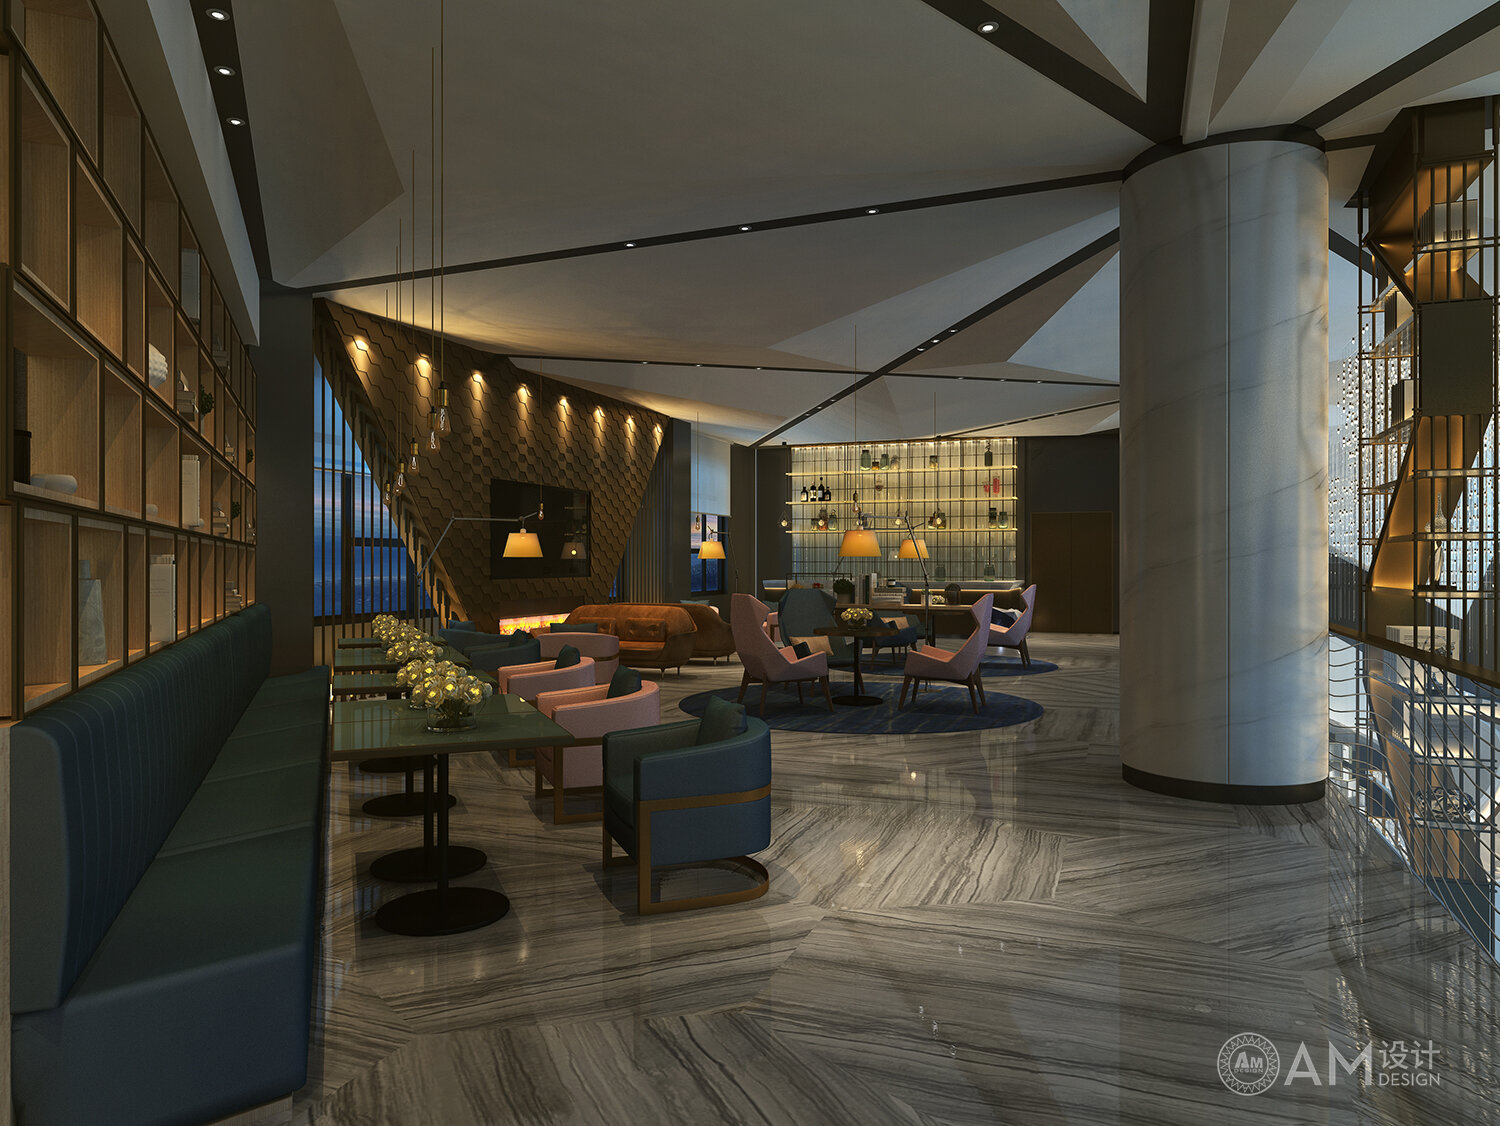 AM DESIGN | Design of coffee shop of Jinpan hotel in Xi'an